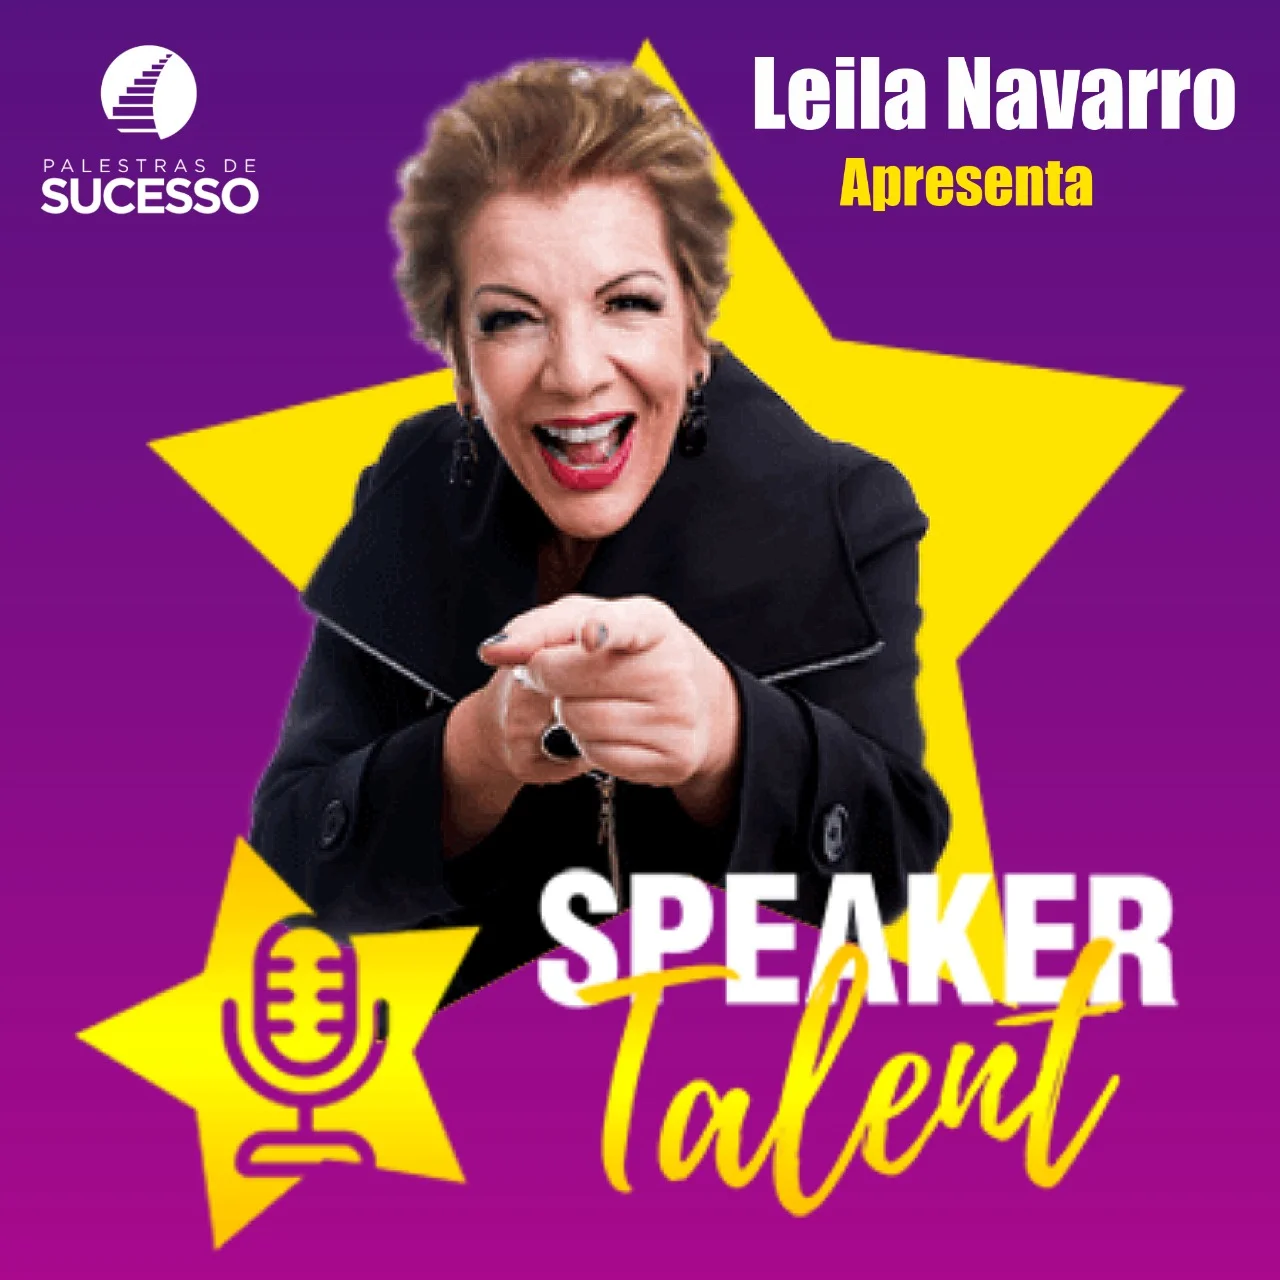 Virar o Jogo - Leila Navarro - Palestrante Motivacional